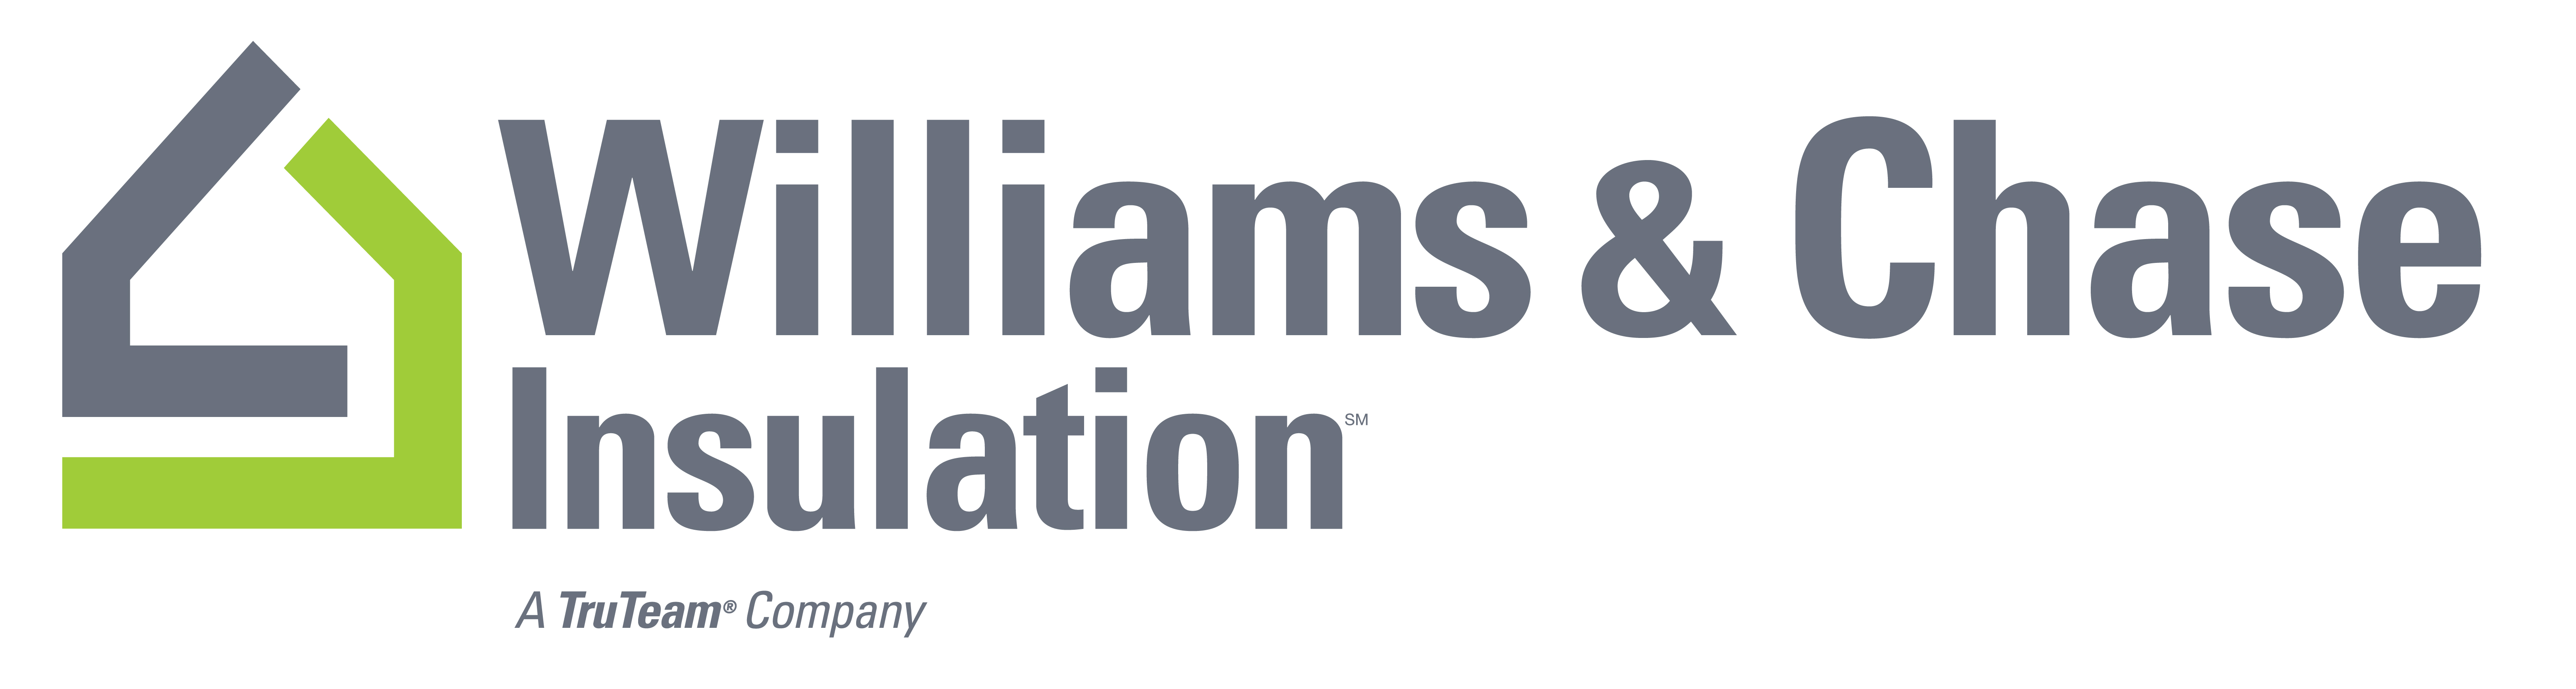 Williams-Chase-Insulation_2020-01.jpg